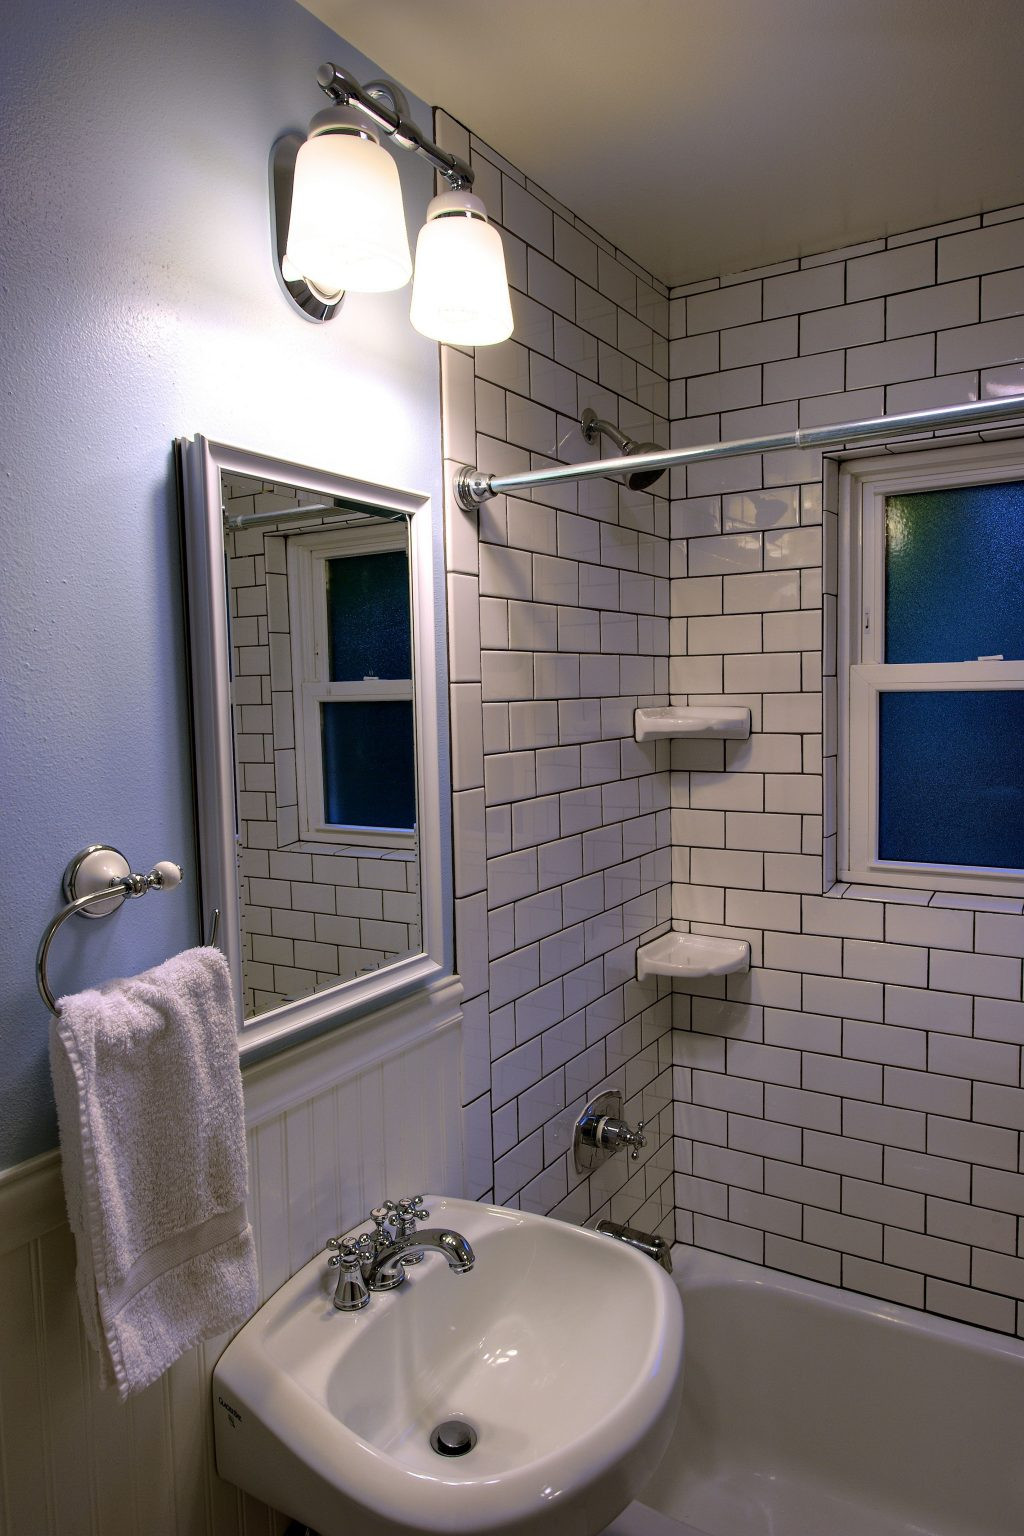 Small Full Bathroom Ideas
 30 Best Small Full Bathroom Design Ideas to Inspire You